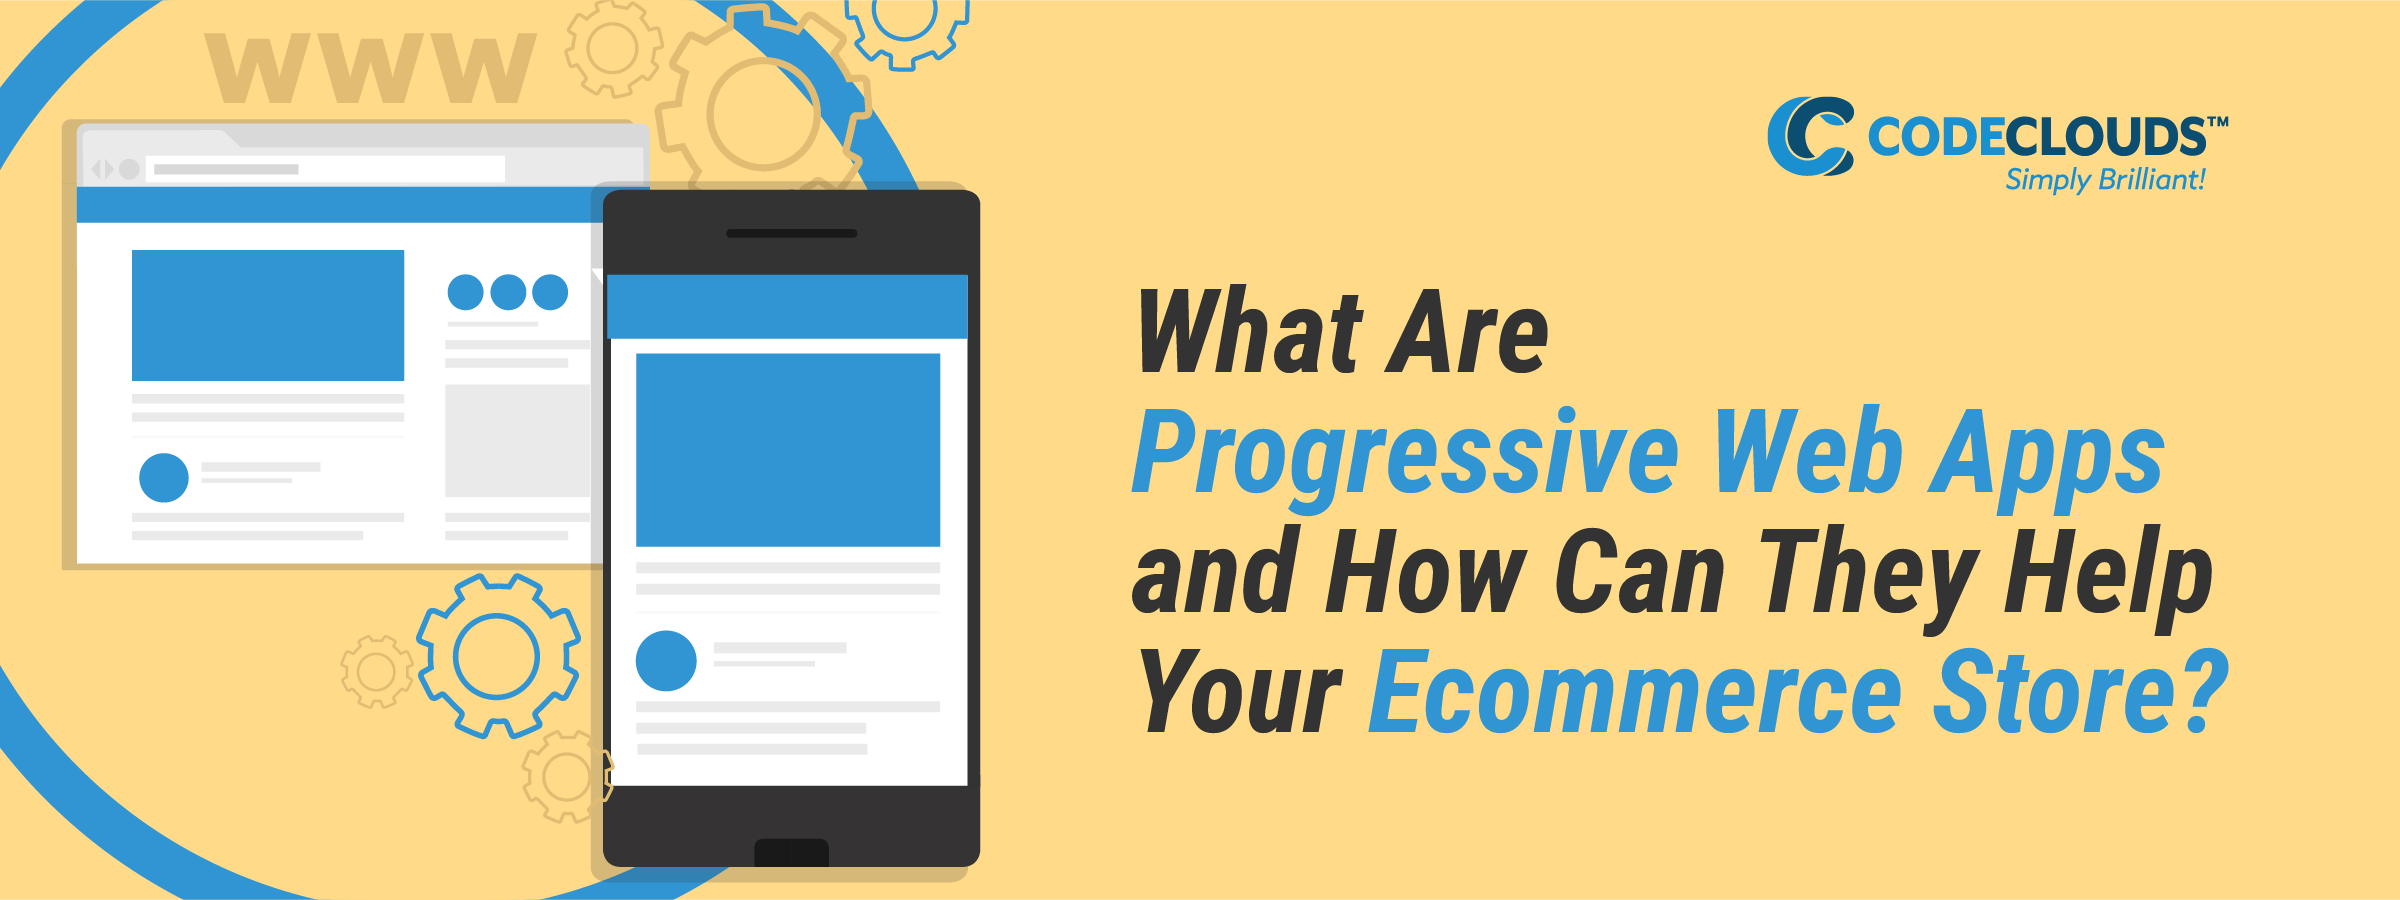 progressive web apps for eCommerce